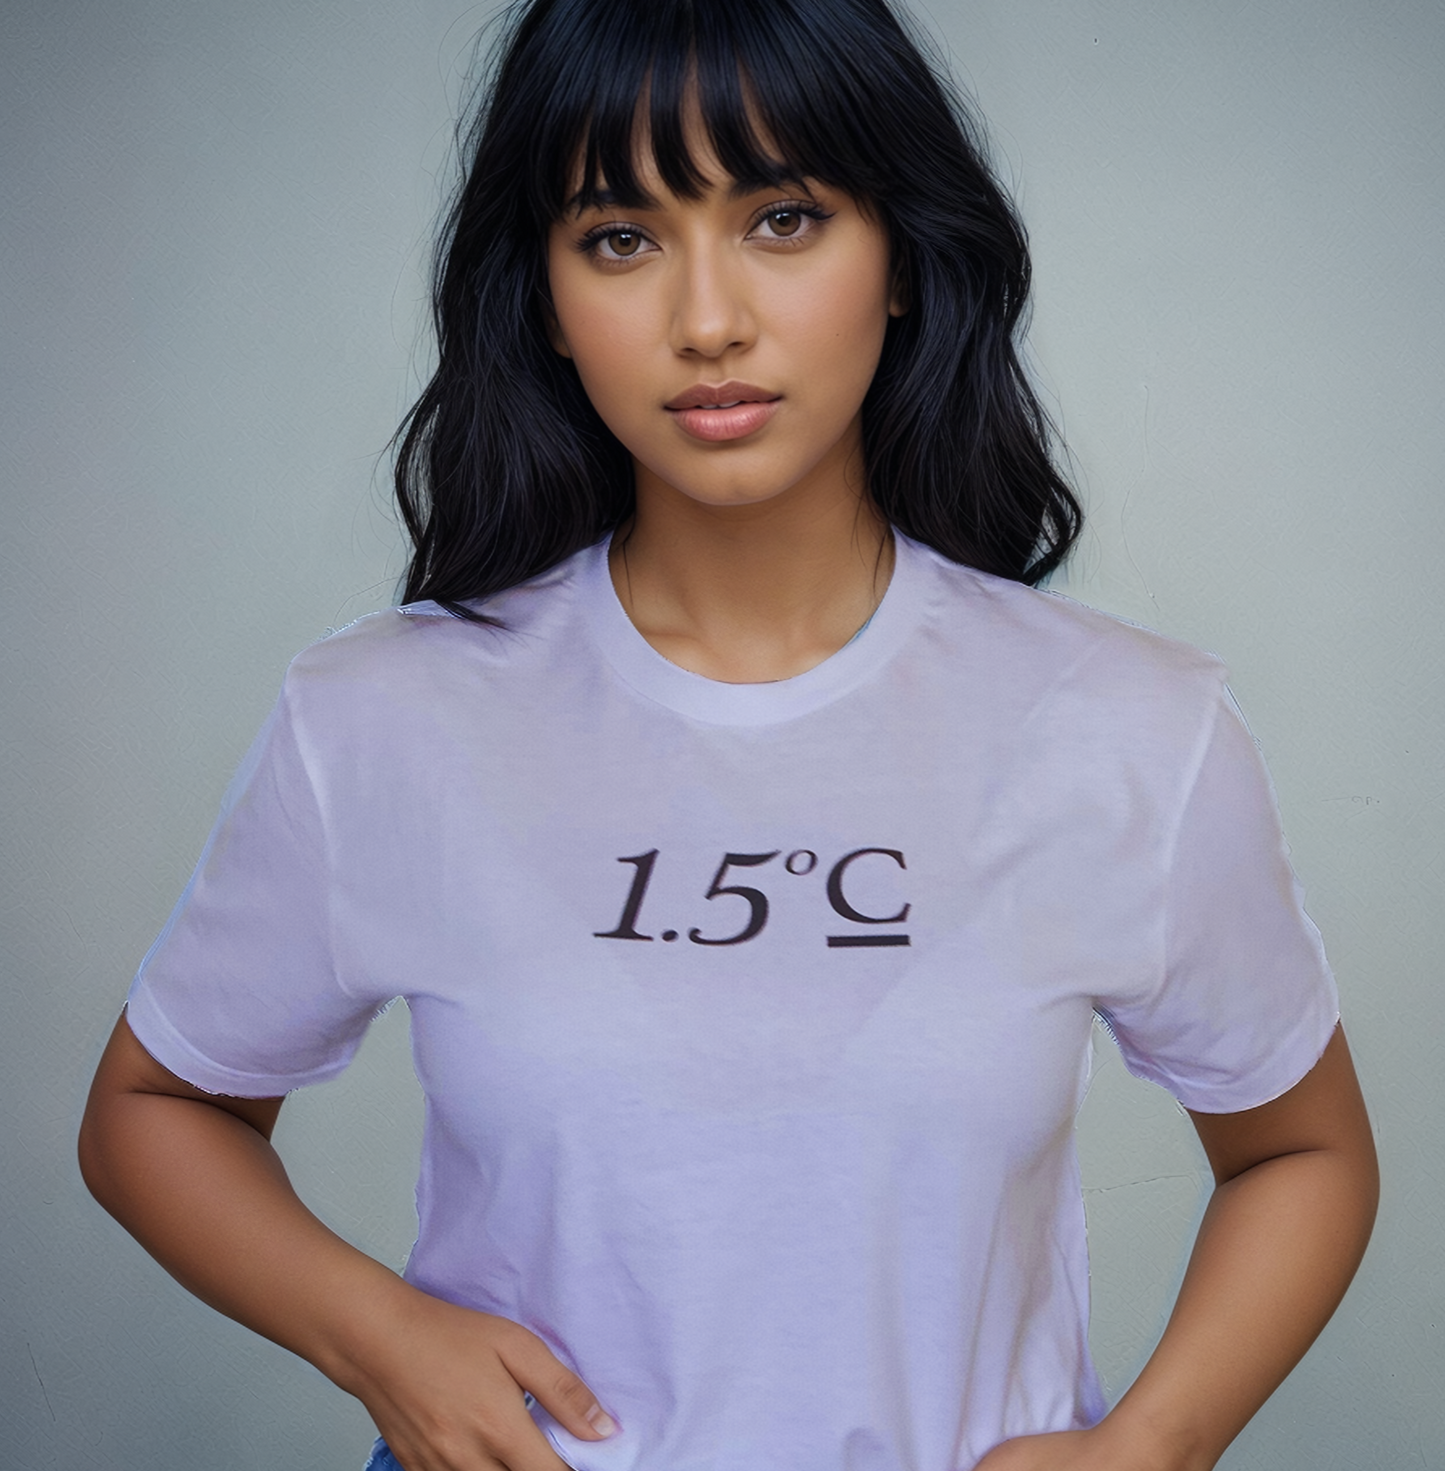 1.5C Earth Advocacy Unisex Crew Neck T-Shirt Involvd Social Advocacy Clothing Brand